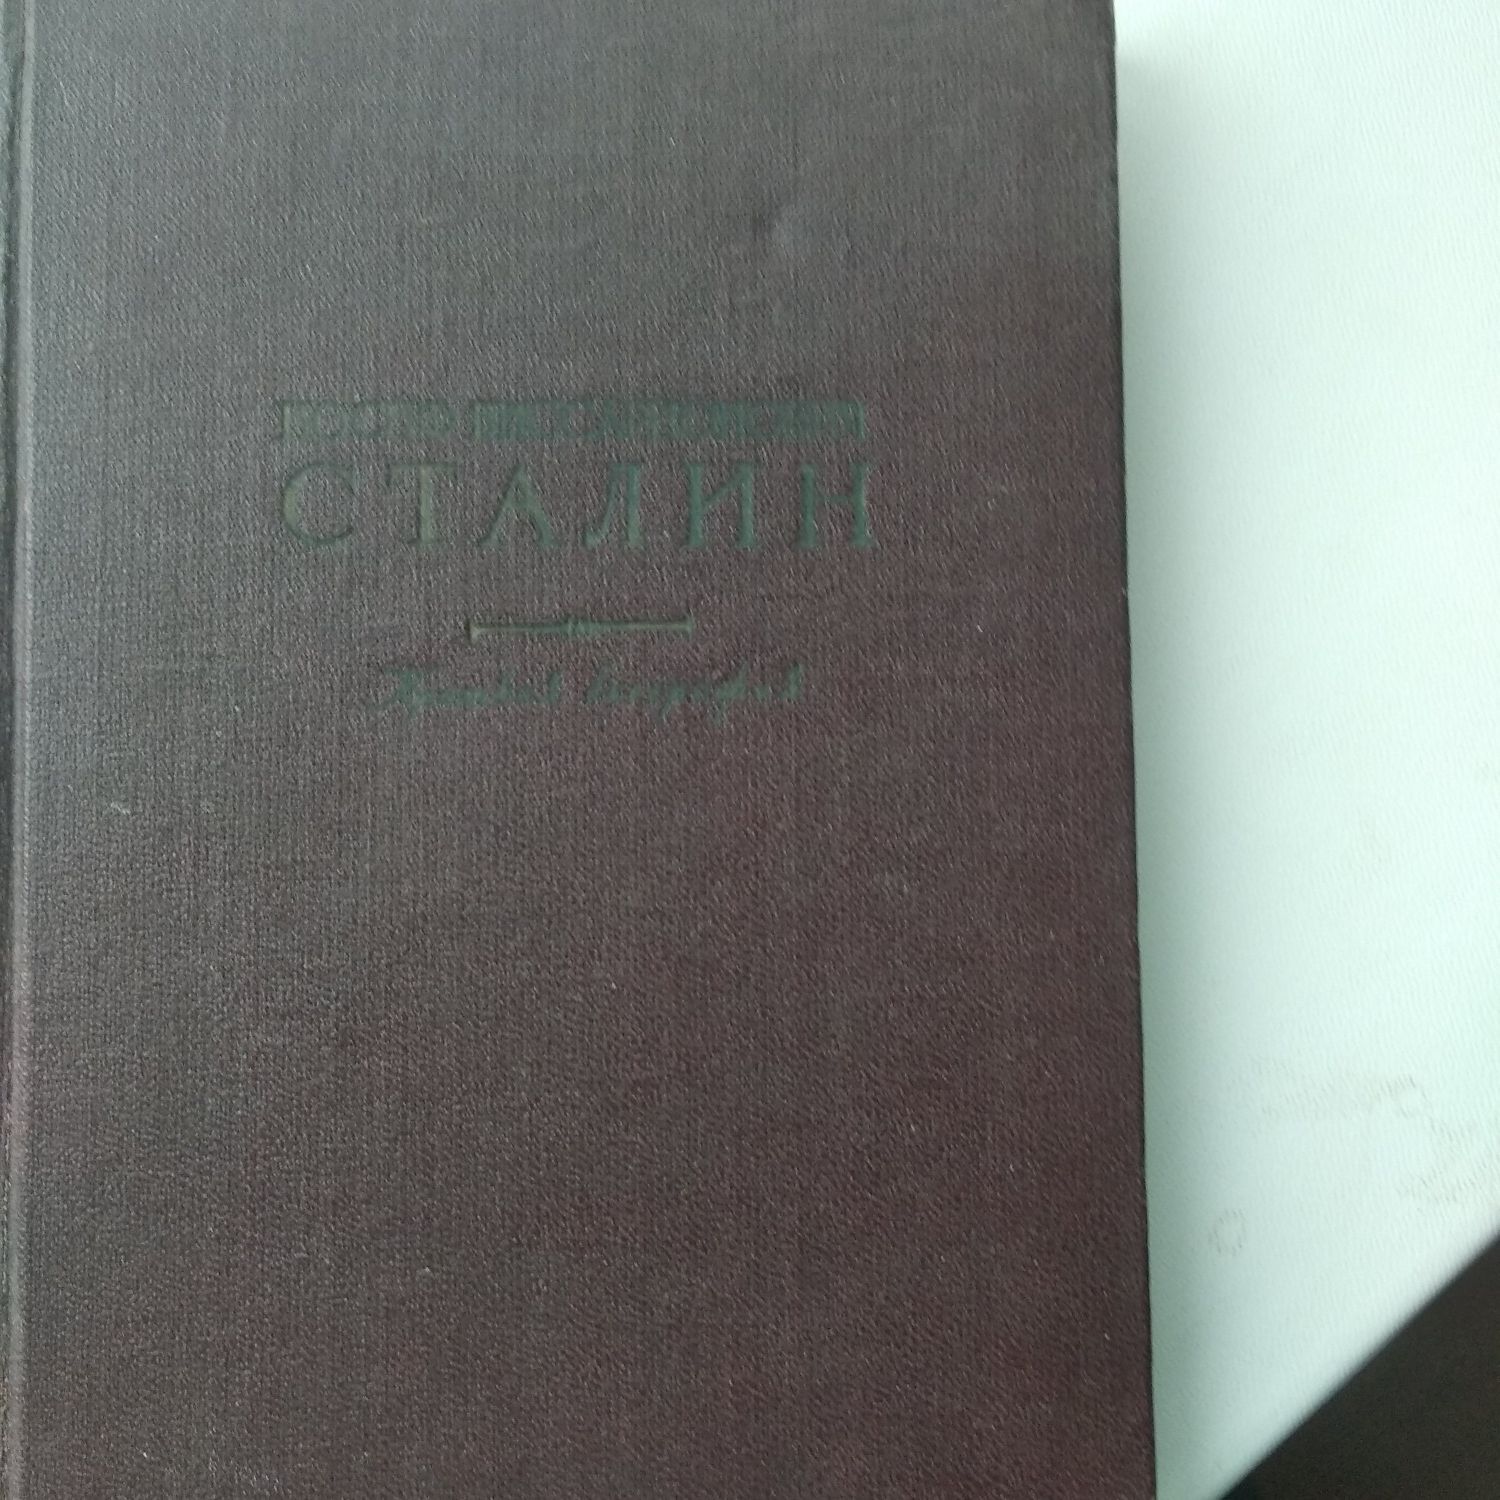 Книга "Иосиф Виссарионович Сталин"